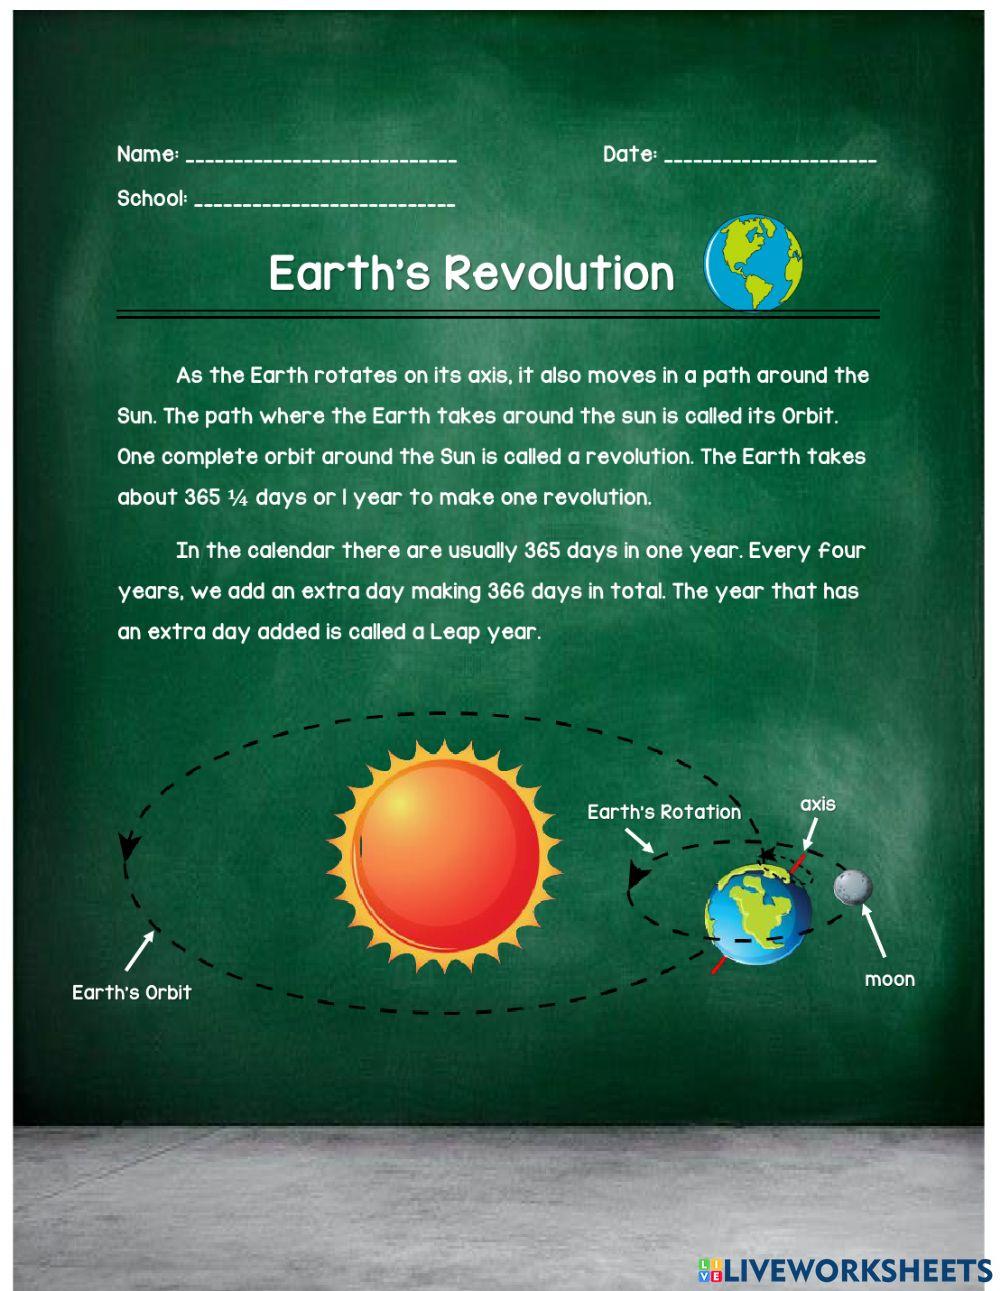 Earth's Revolution